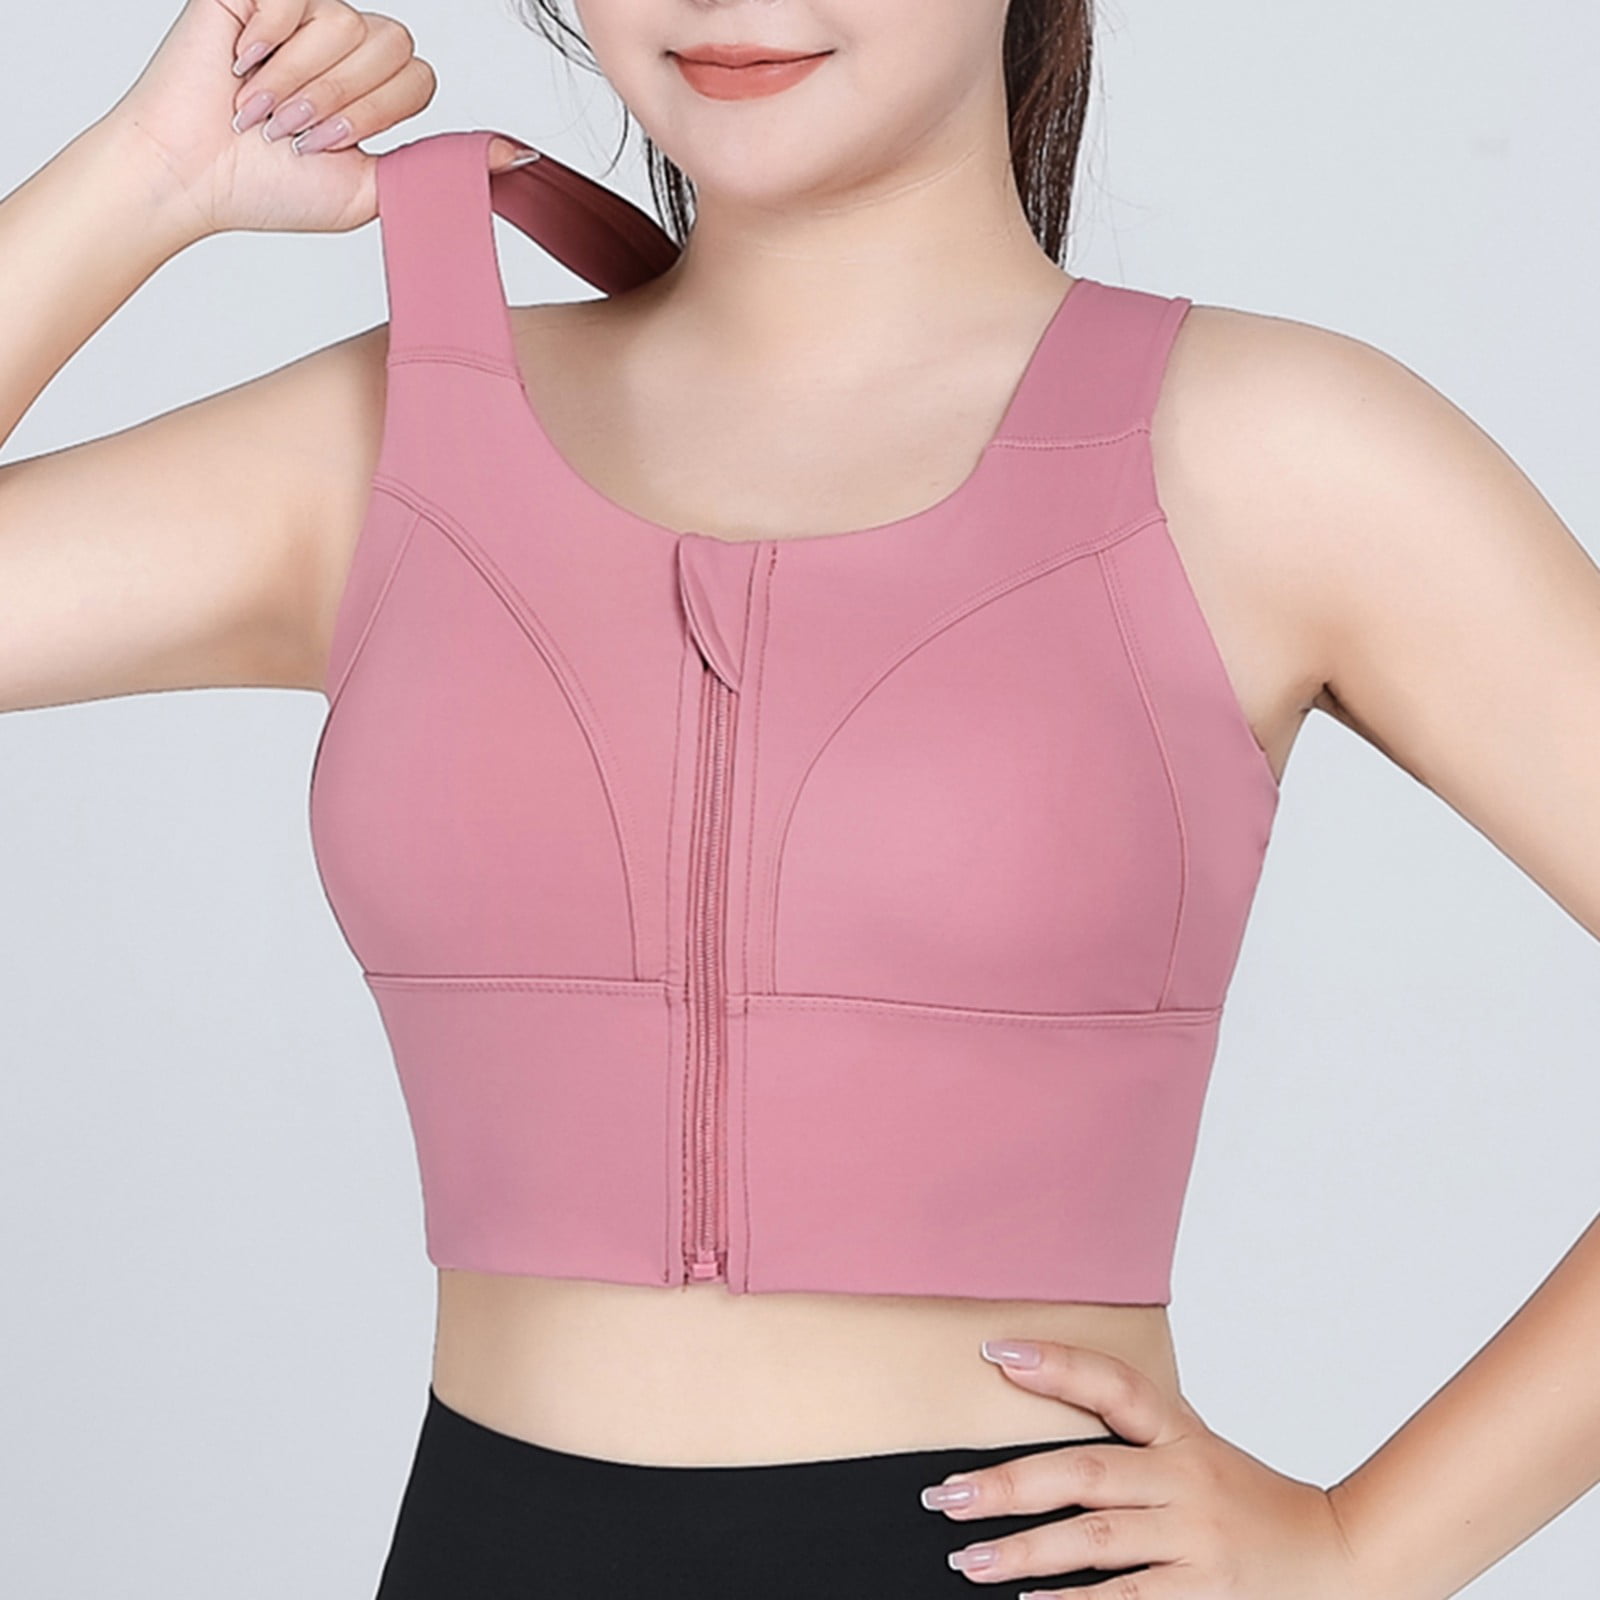 Tdoqot Women's Seamless Plus Size Front Closure High Impact Zip up Sports  Bra Pink Size XXXXXL